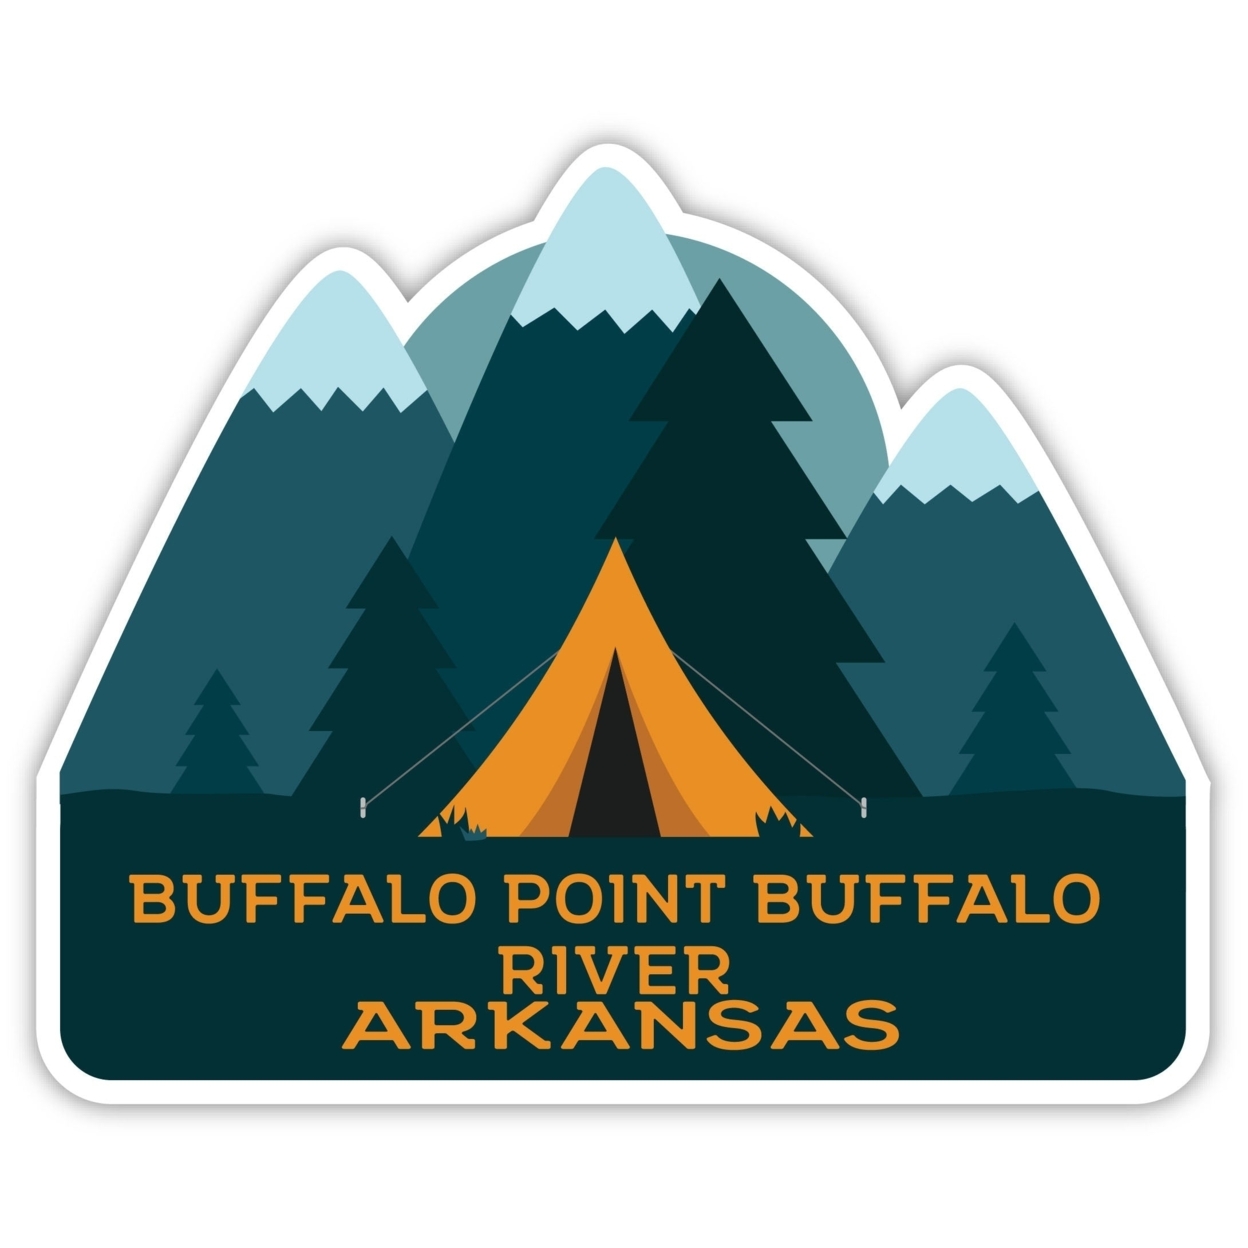 Buffalo Point Buffalo River Arkansas Souvenir Decorative Stickers (Choose Theme And Size) - Single Unit, 8-Inch, Camp Life